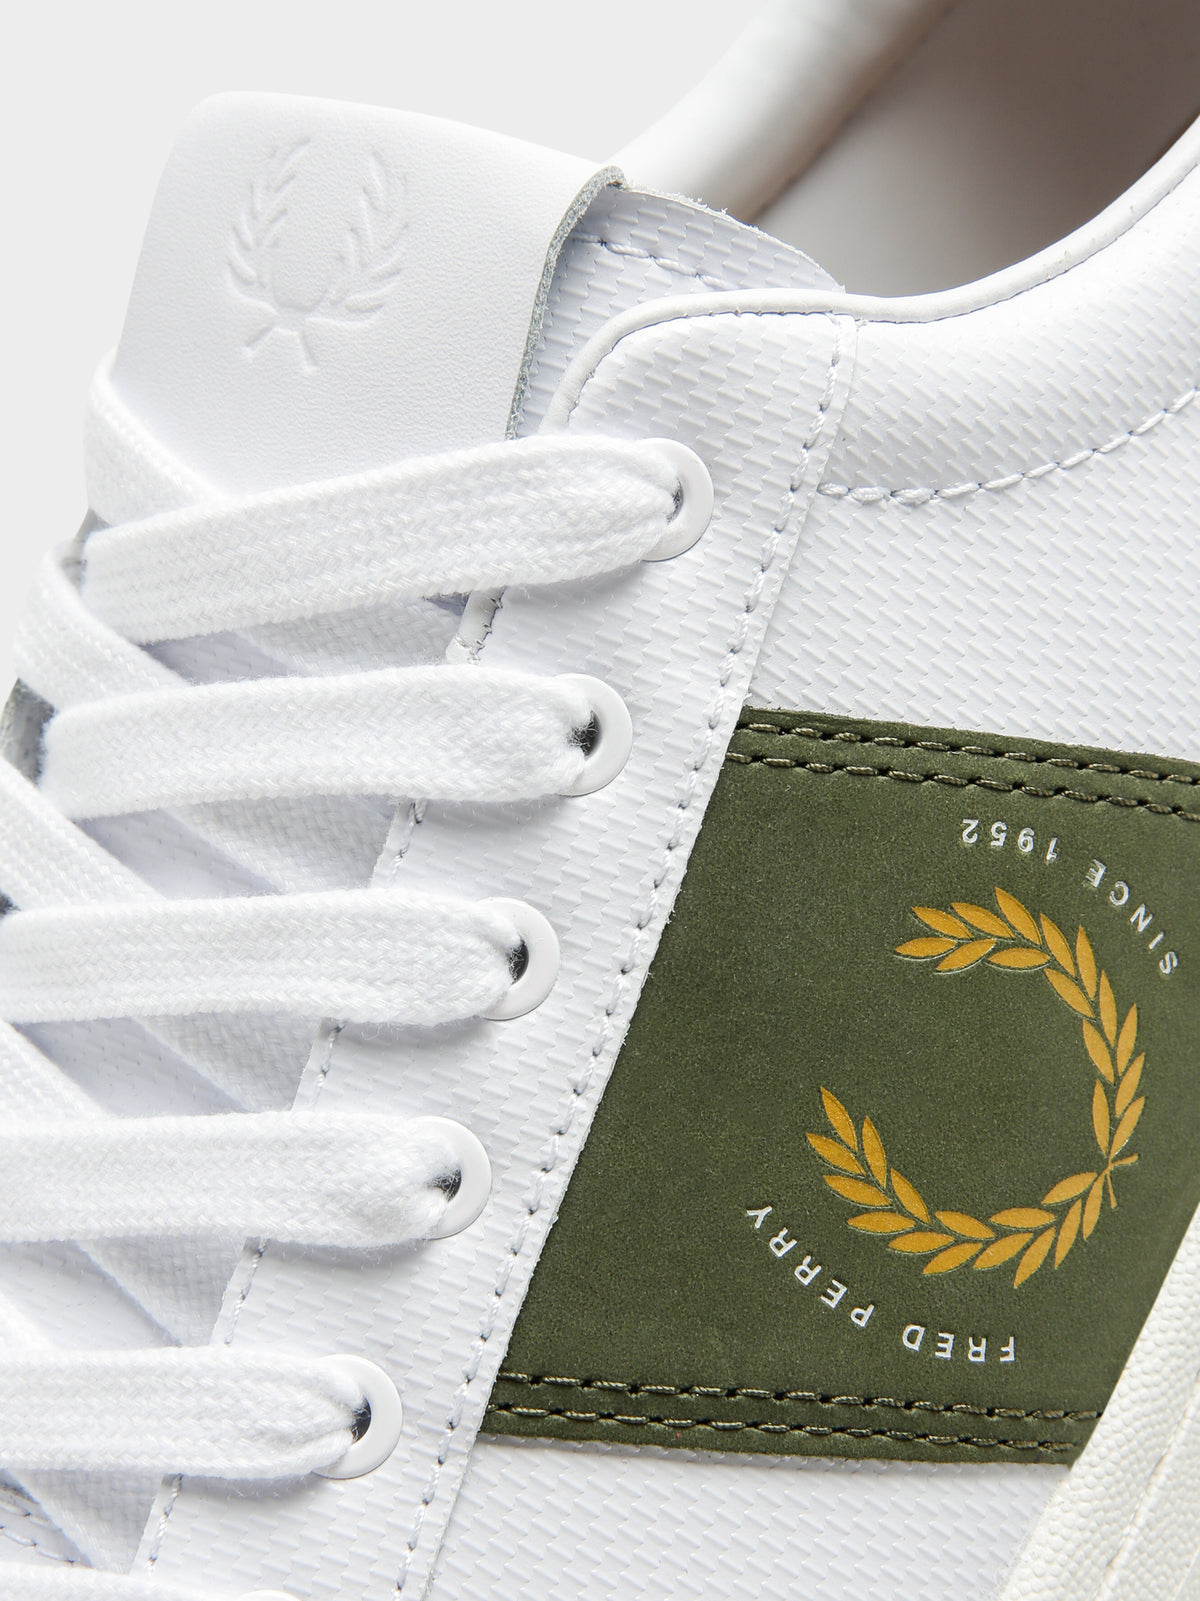 Mens B721 Pique Emblem Sneaker in White &amp; Khaki